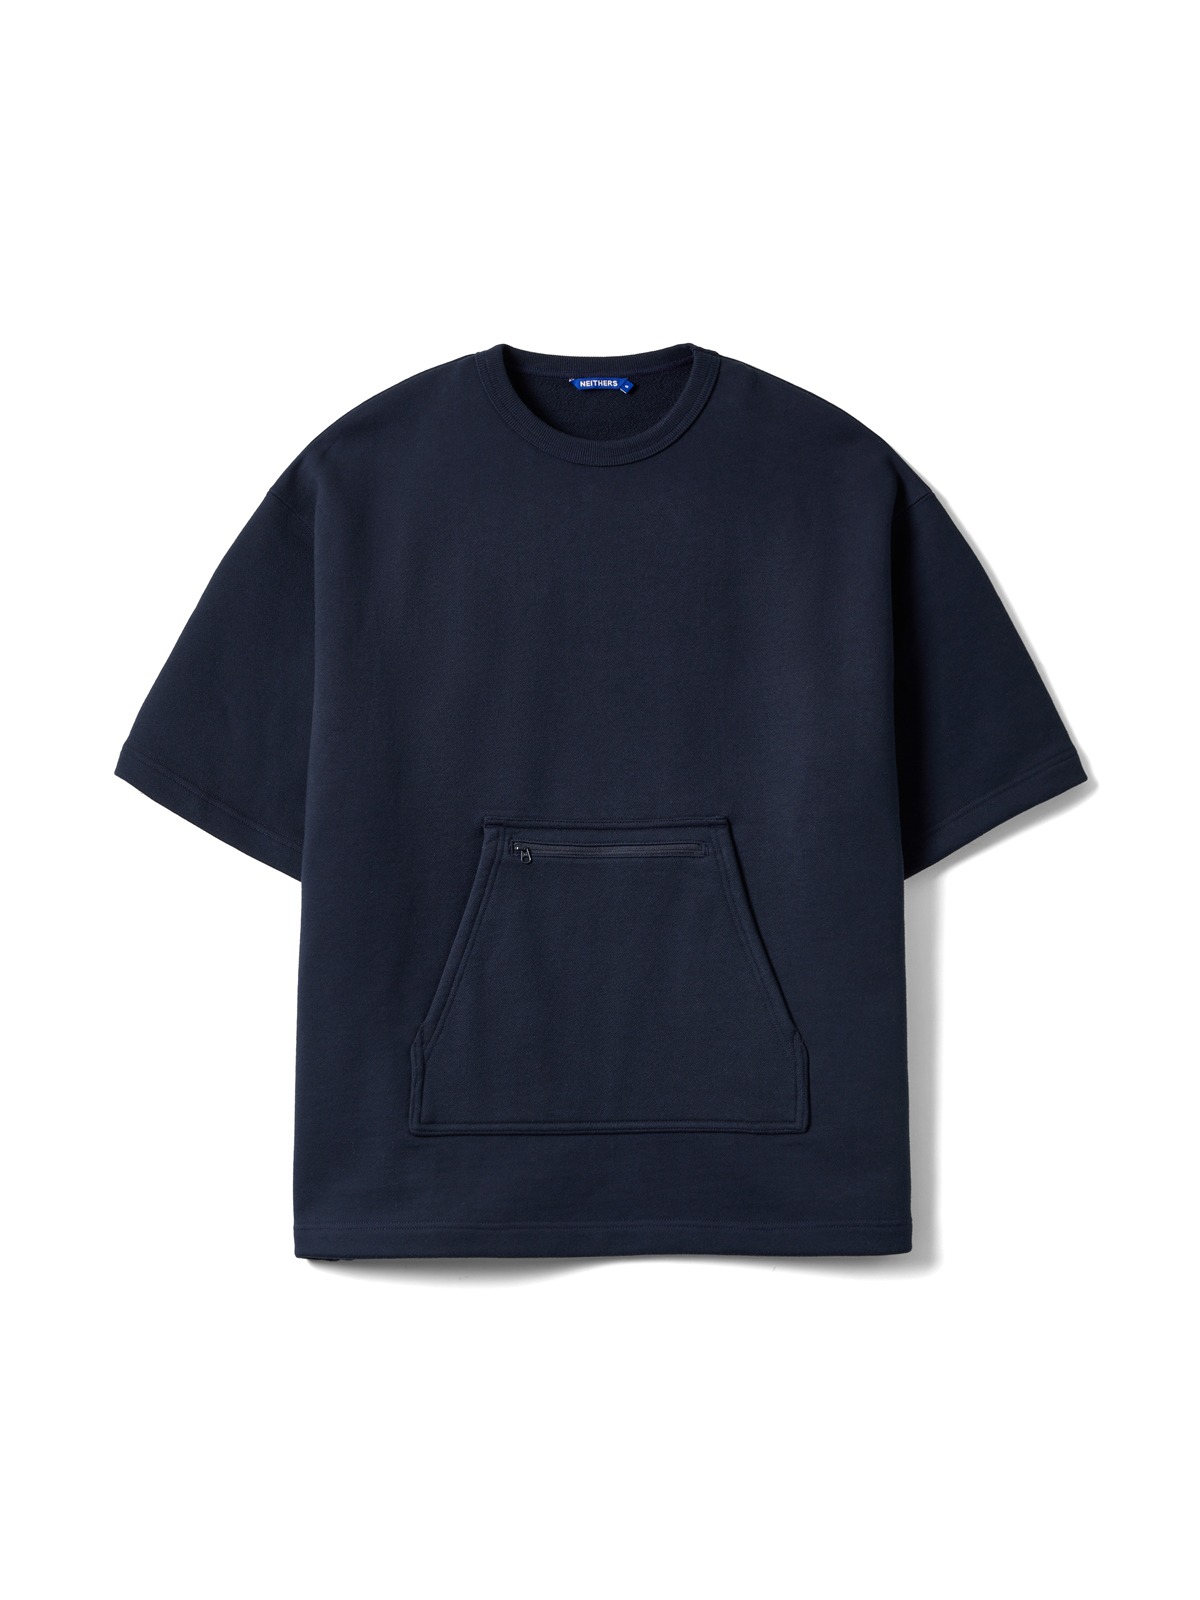 Newsboy Utility S/S Sweatshirt (Dark Navy)